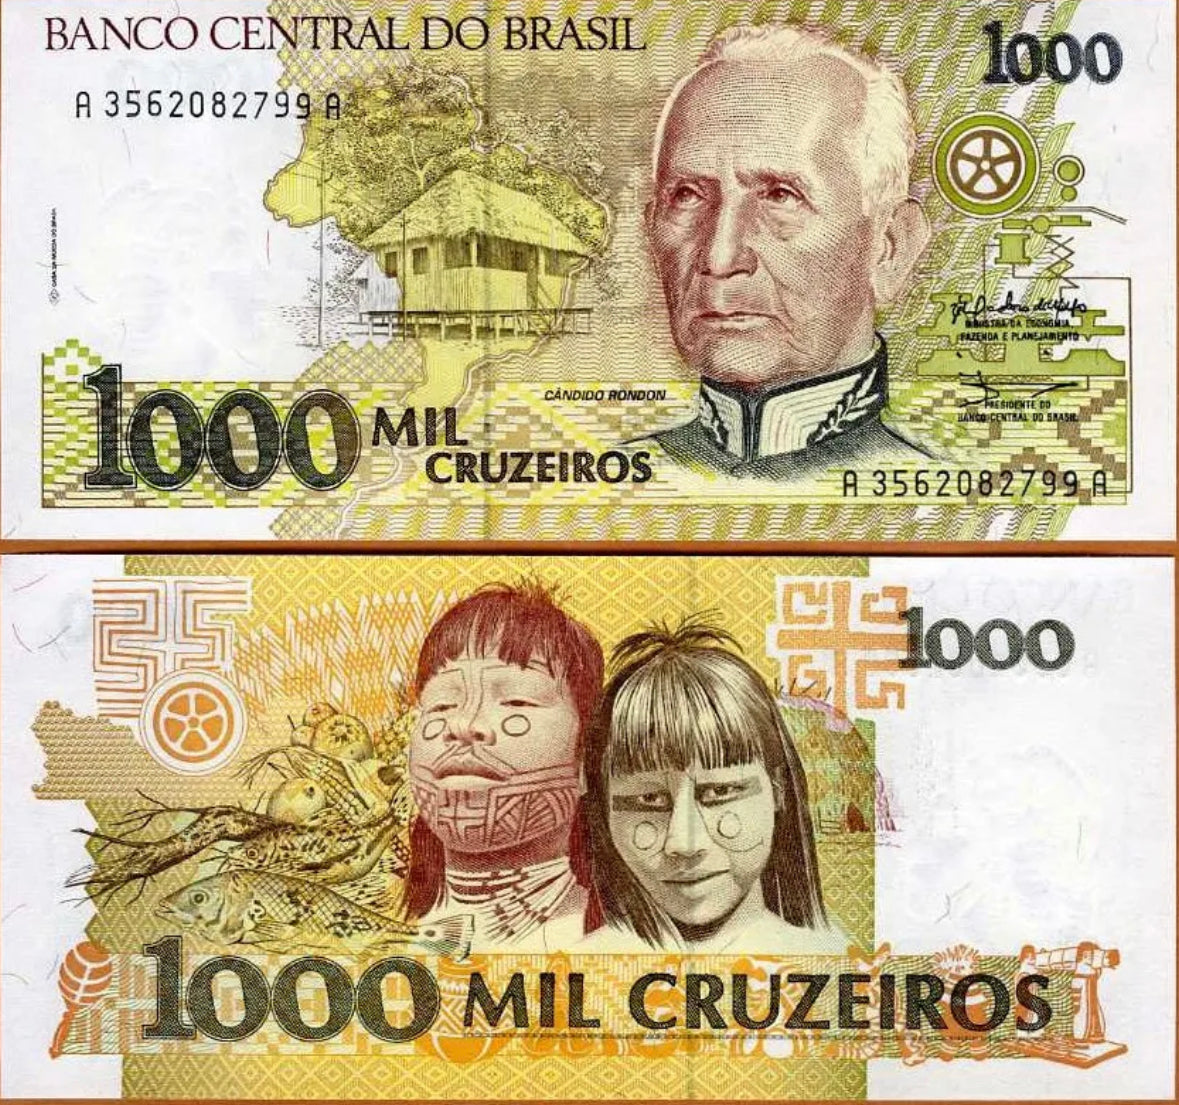 Brazil, 1000 cruzeiros, ND (1990), P-231a, UNC Native Children